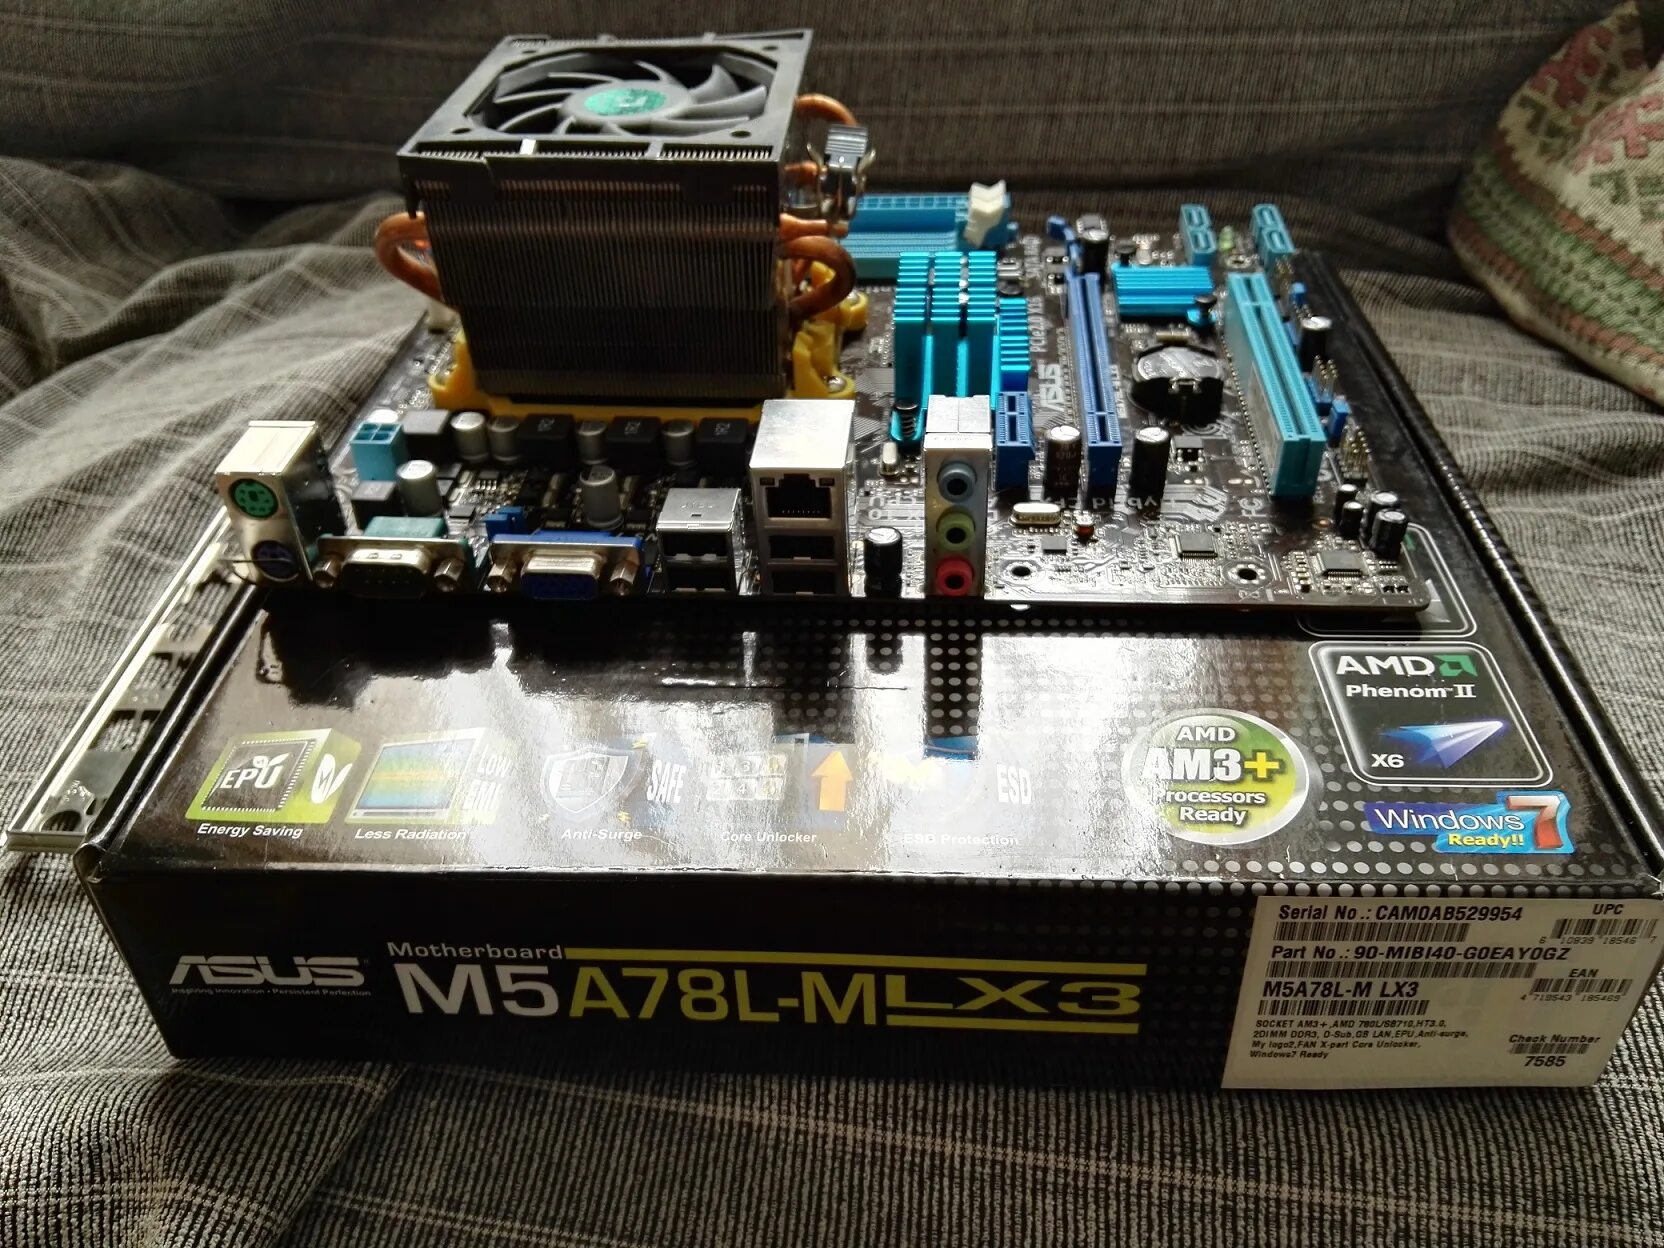 M5a78l m поддерживаемые процессоры. M5a78l-m lx3. ASUS m5a78l-m lx3 перемычки. M5a78l-m LX разъемы. AMD FX 6300 ASUS m5a78l-m LX.